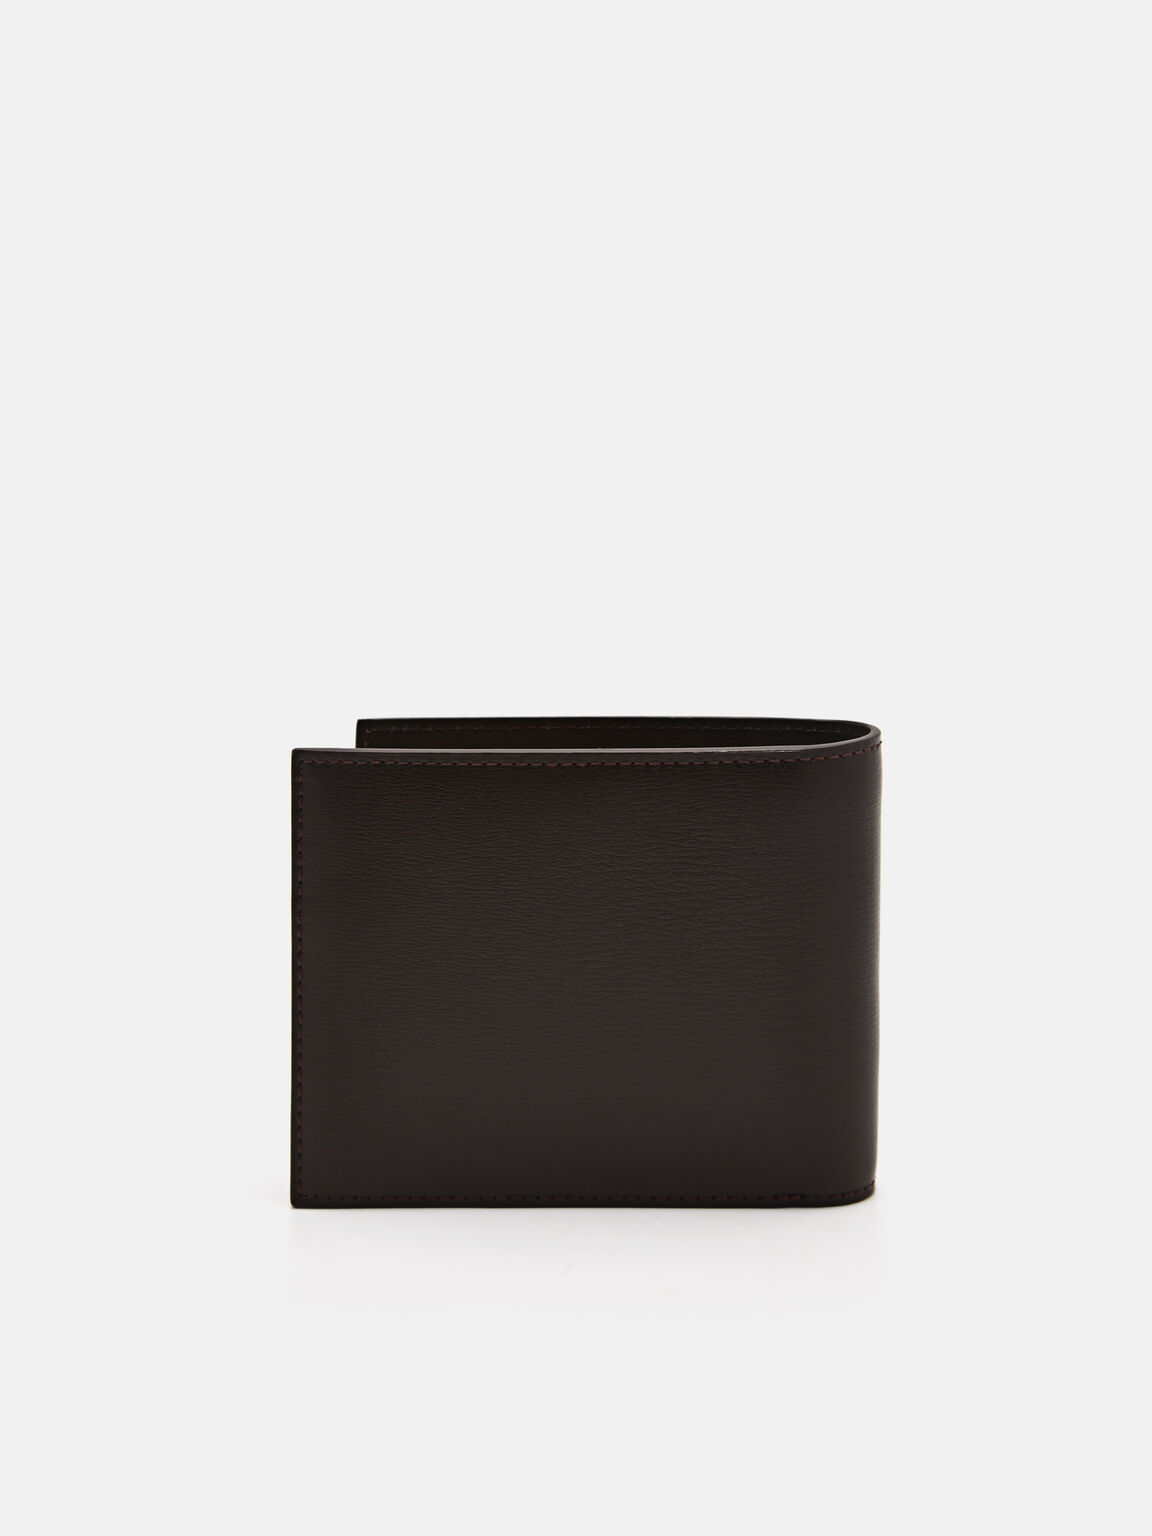 Leather Bi-Fold Wallet with Insert, Dark Brown